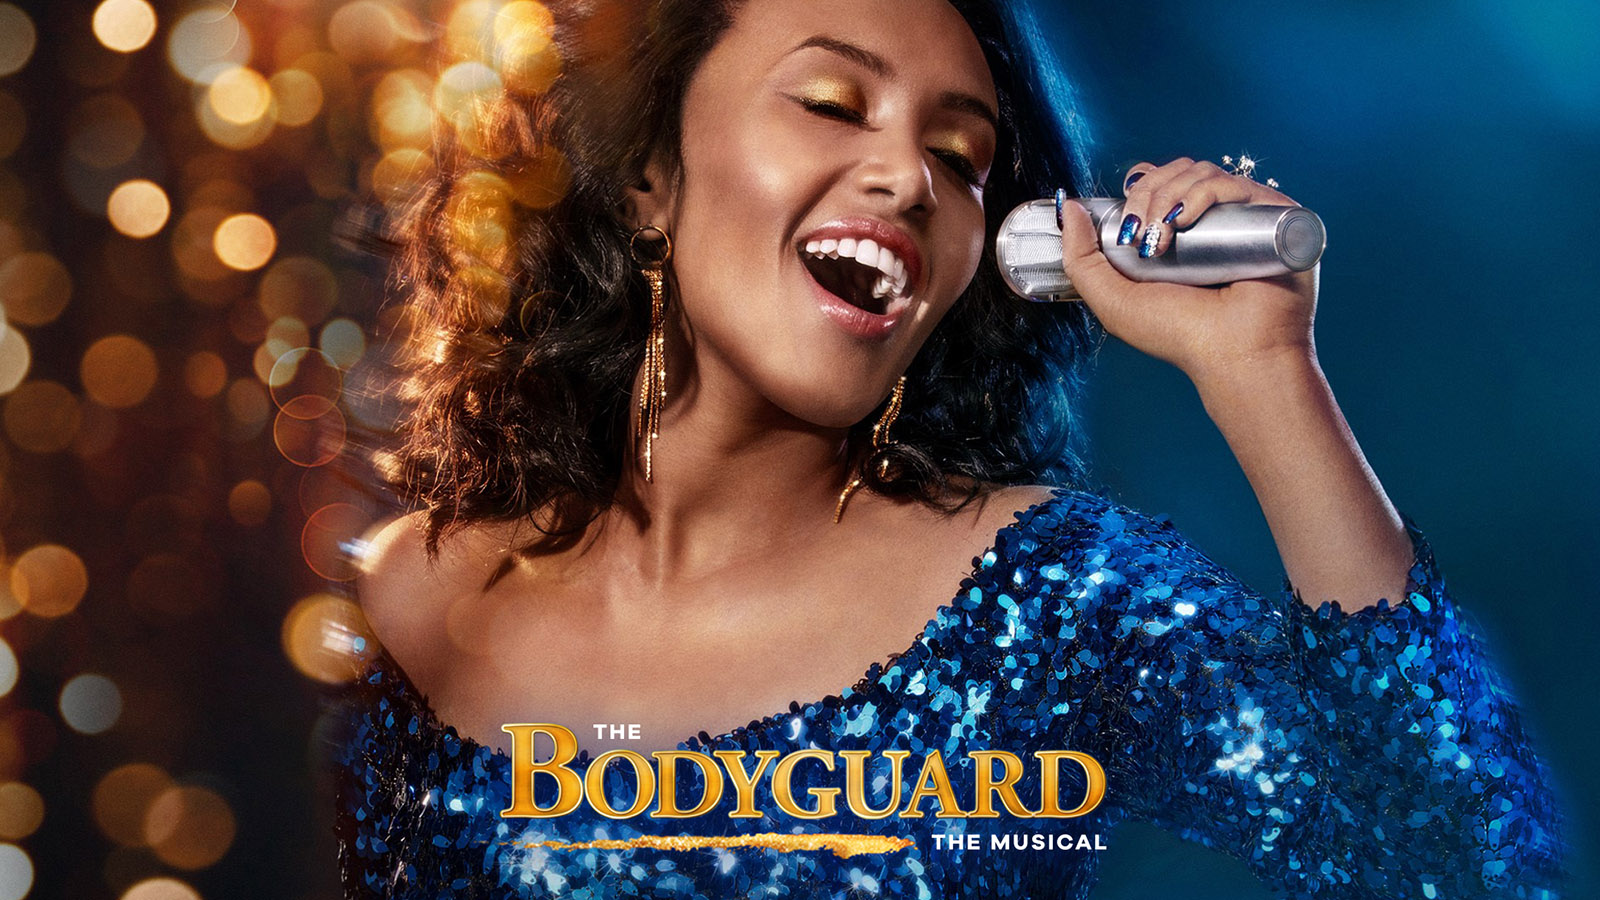 The Bodyguard, the musical